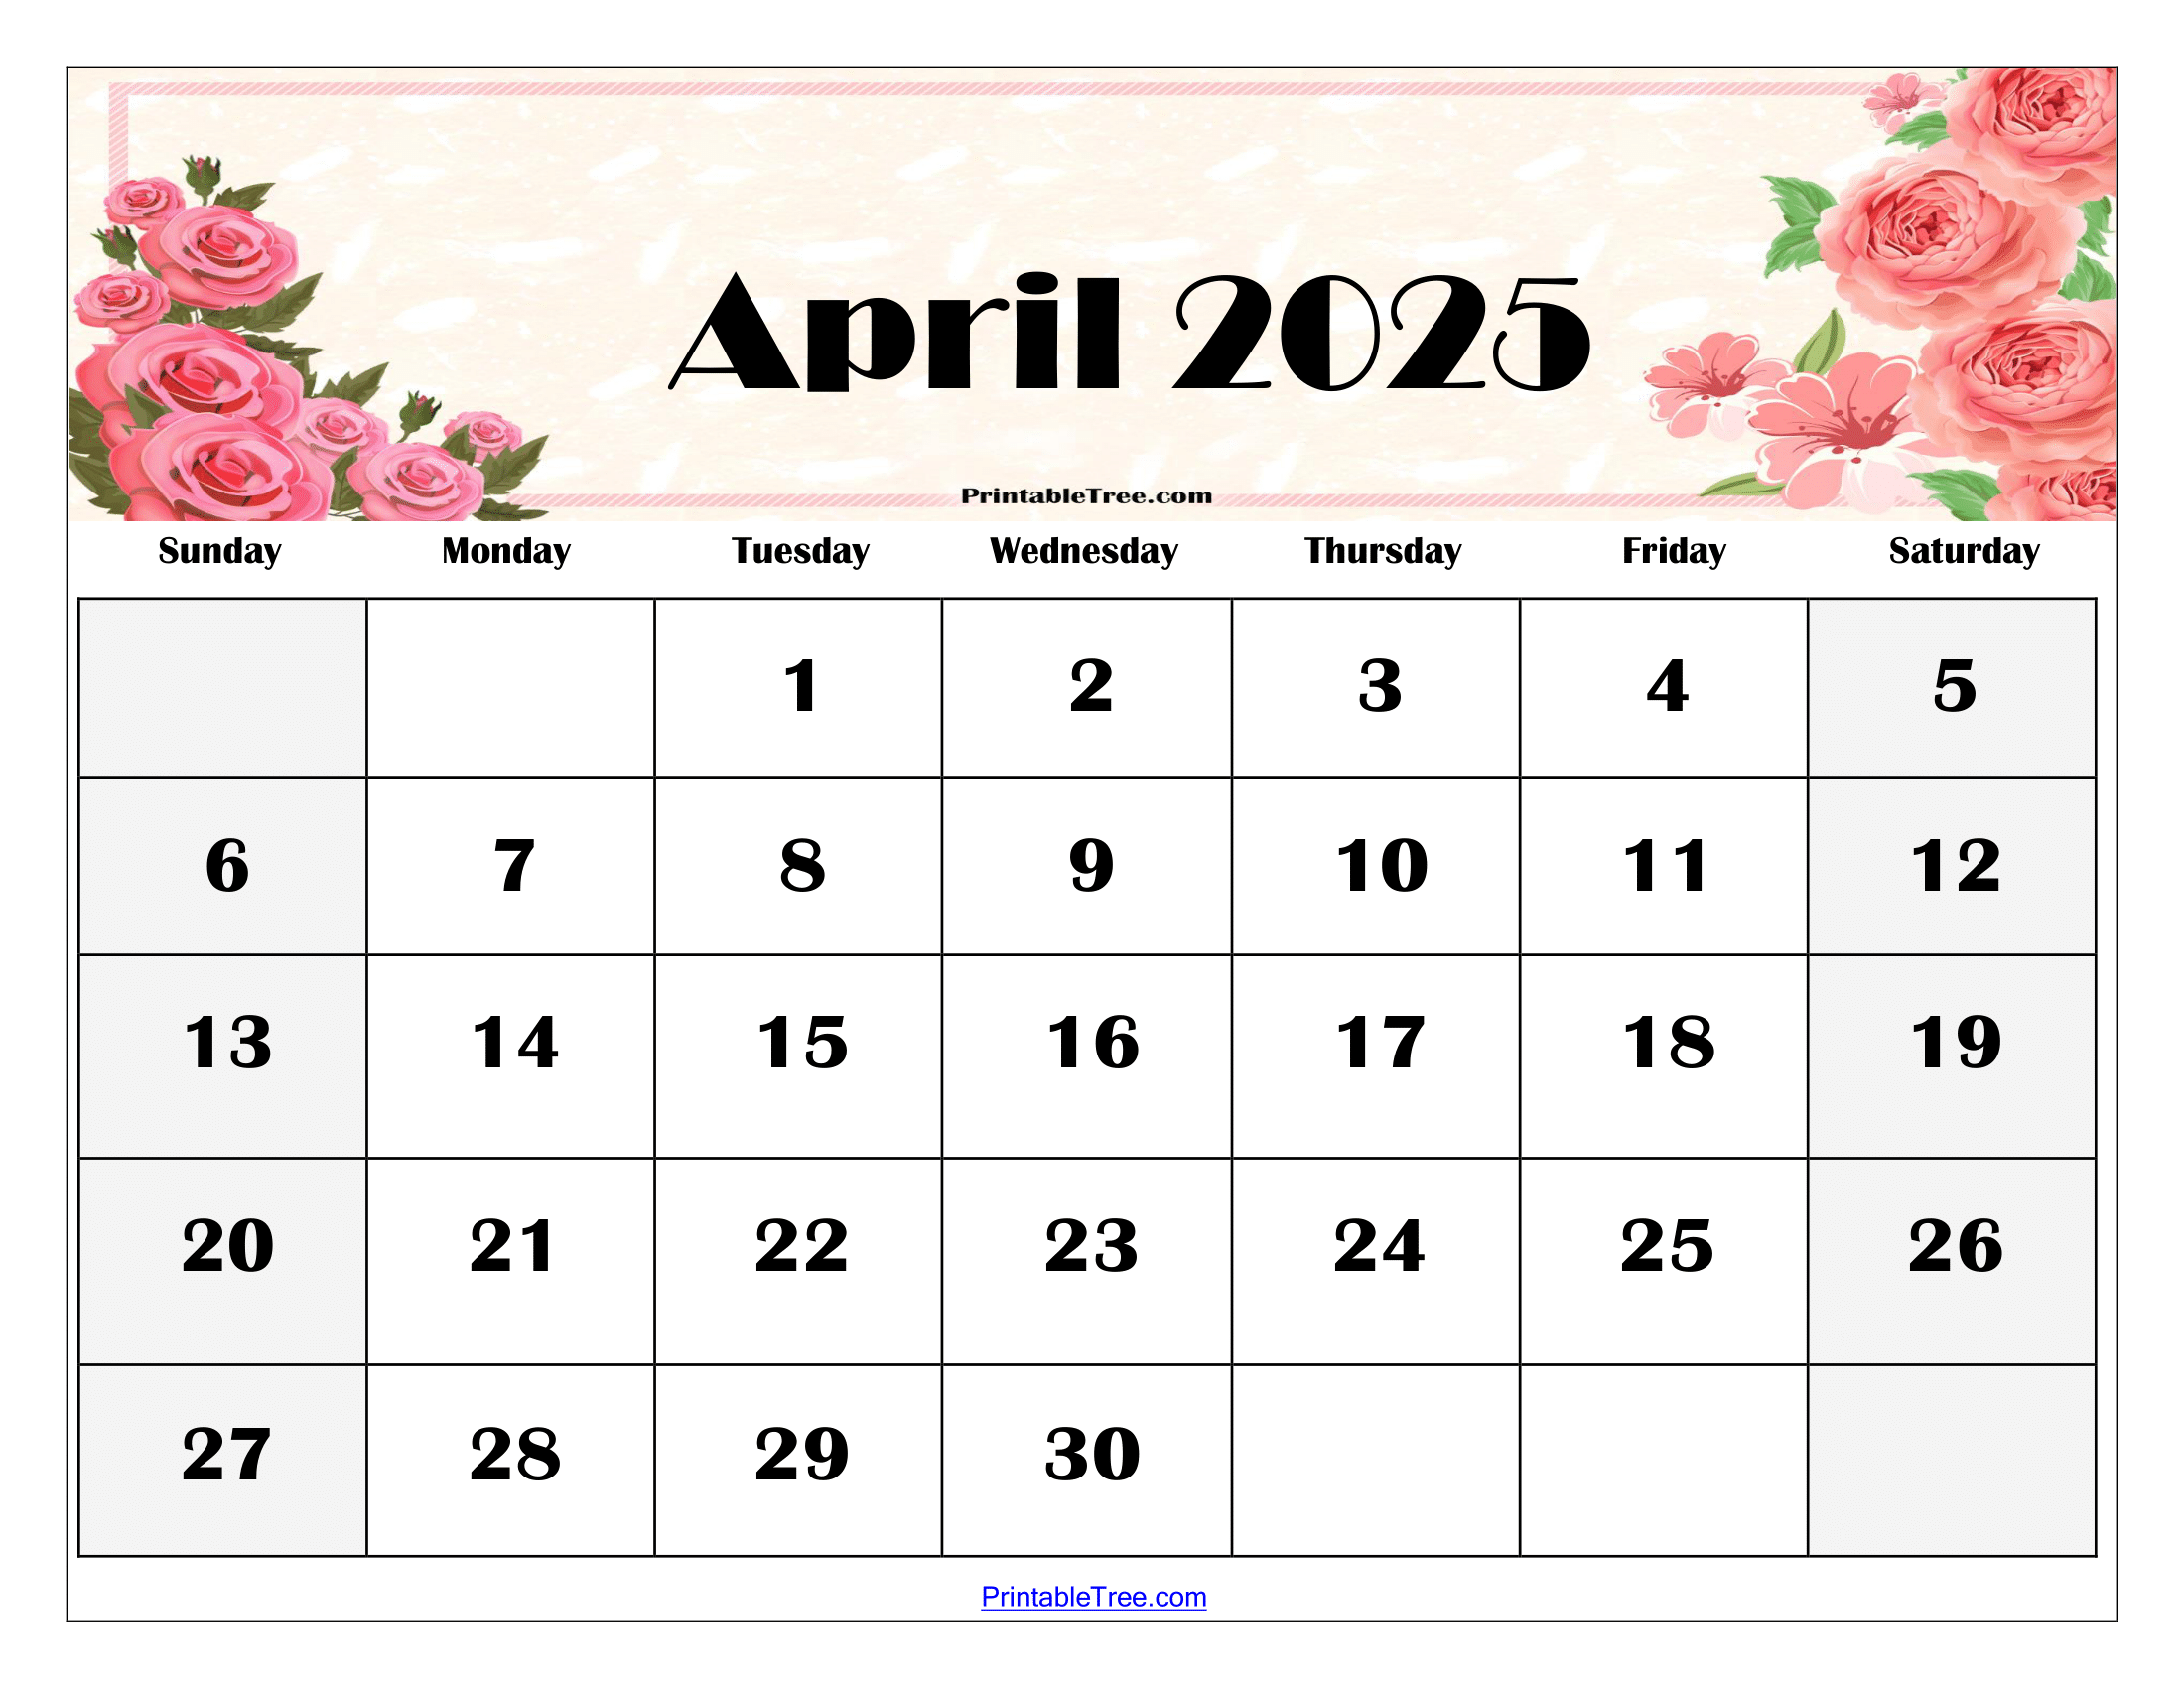 April 2025 Calendar Printable PDF